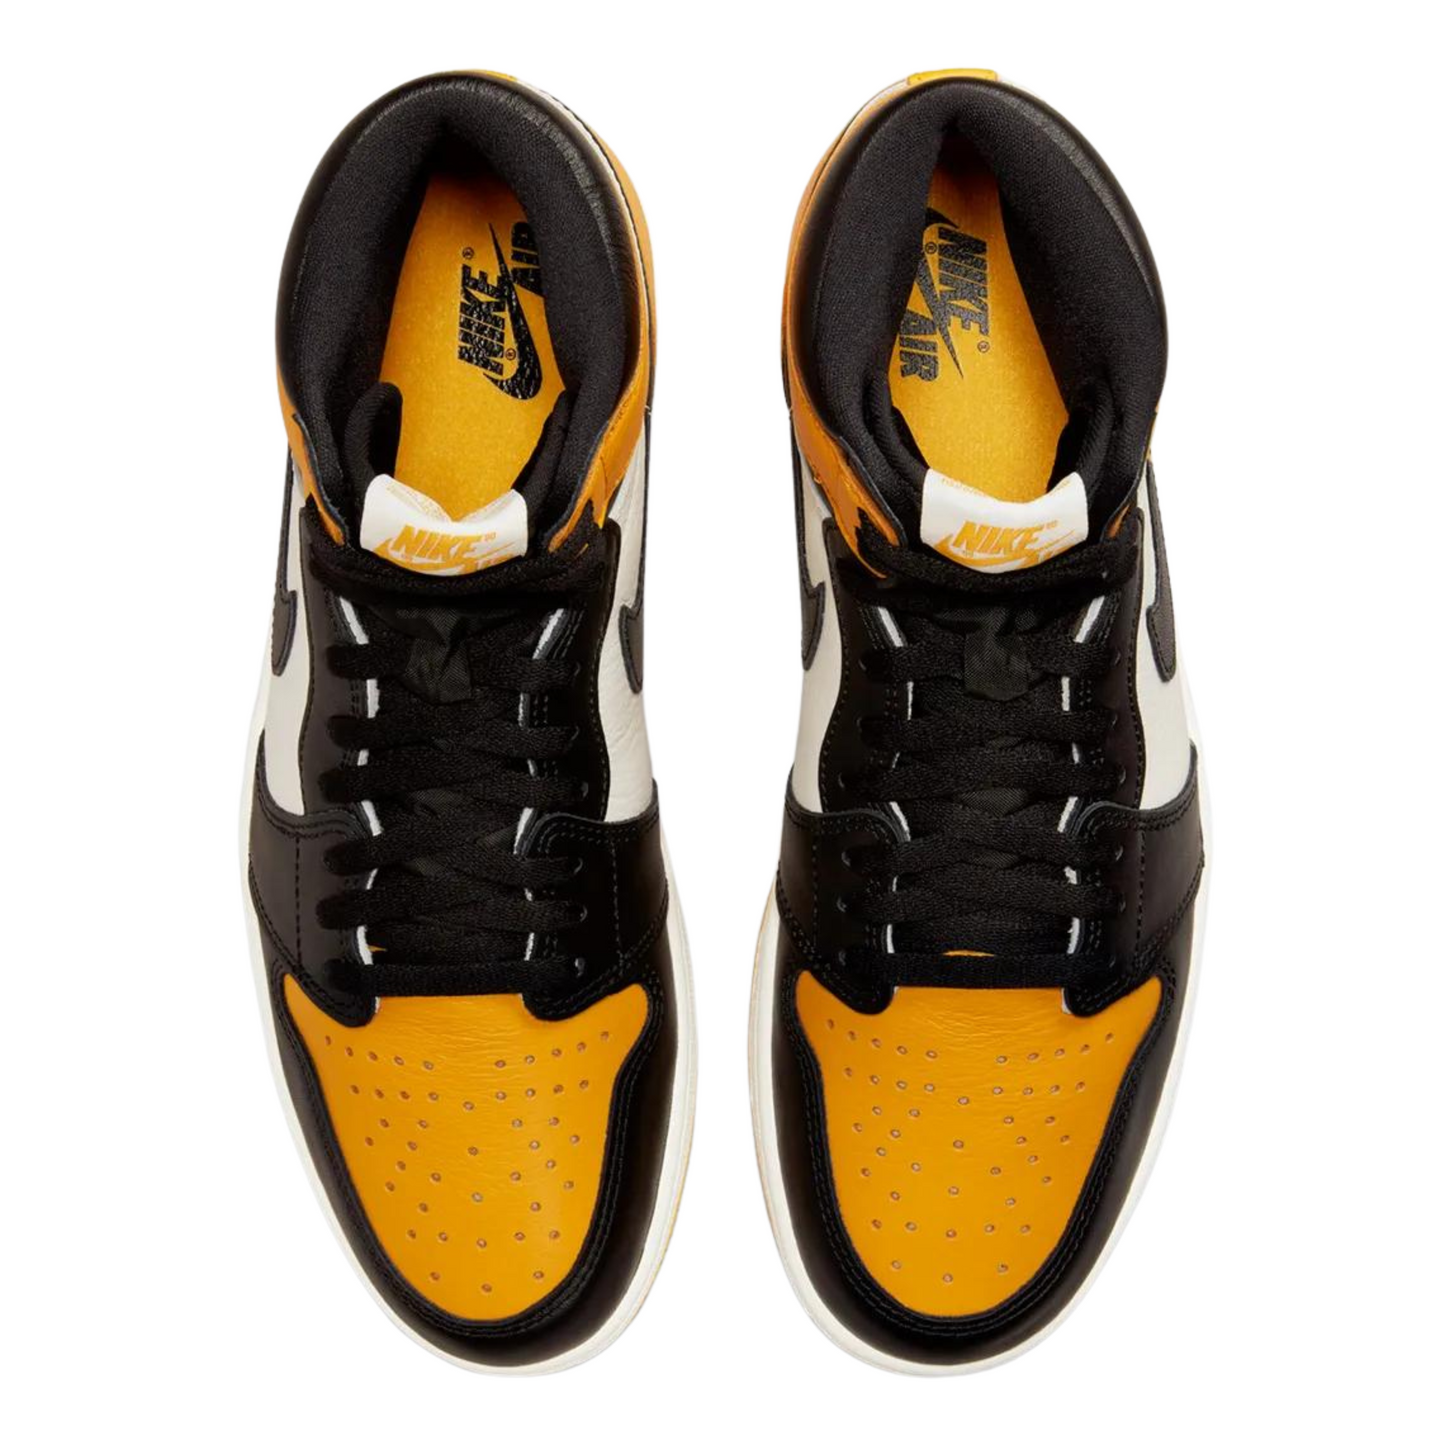 Air Jordan 1 Retro High OG “Yellow Toe”